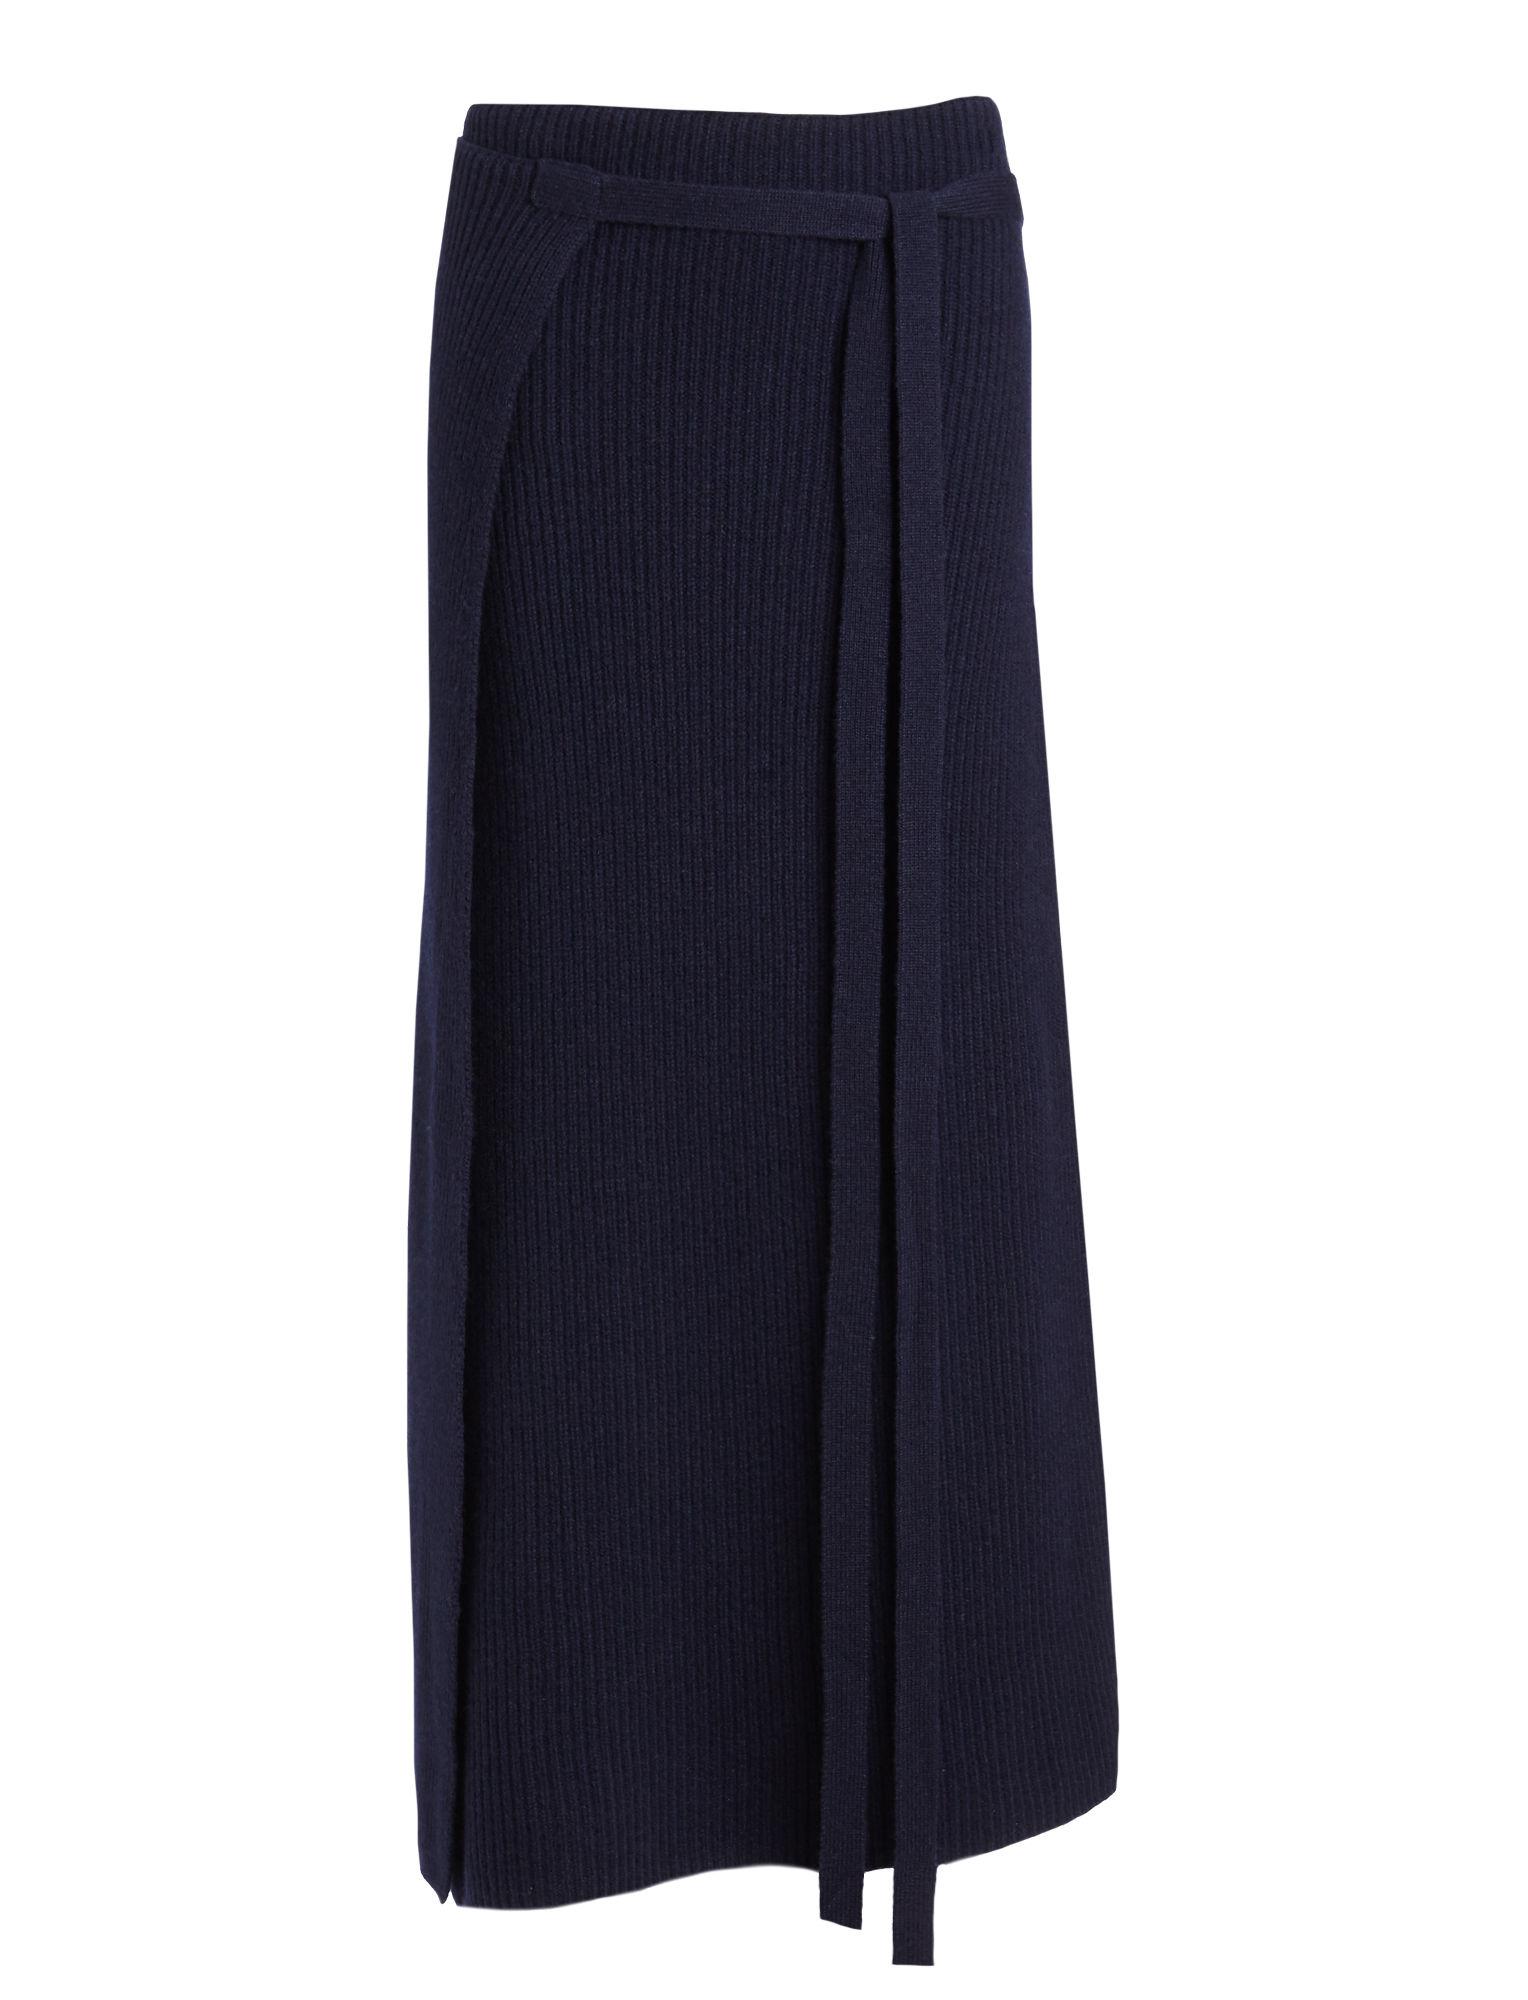 JOSEPH Soft Wool Wrap Skirt in Navy (Blue) - Lyst